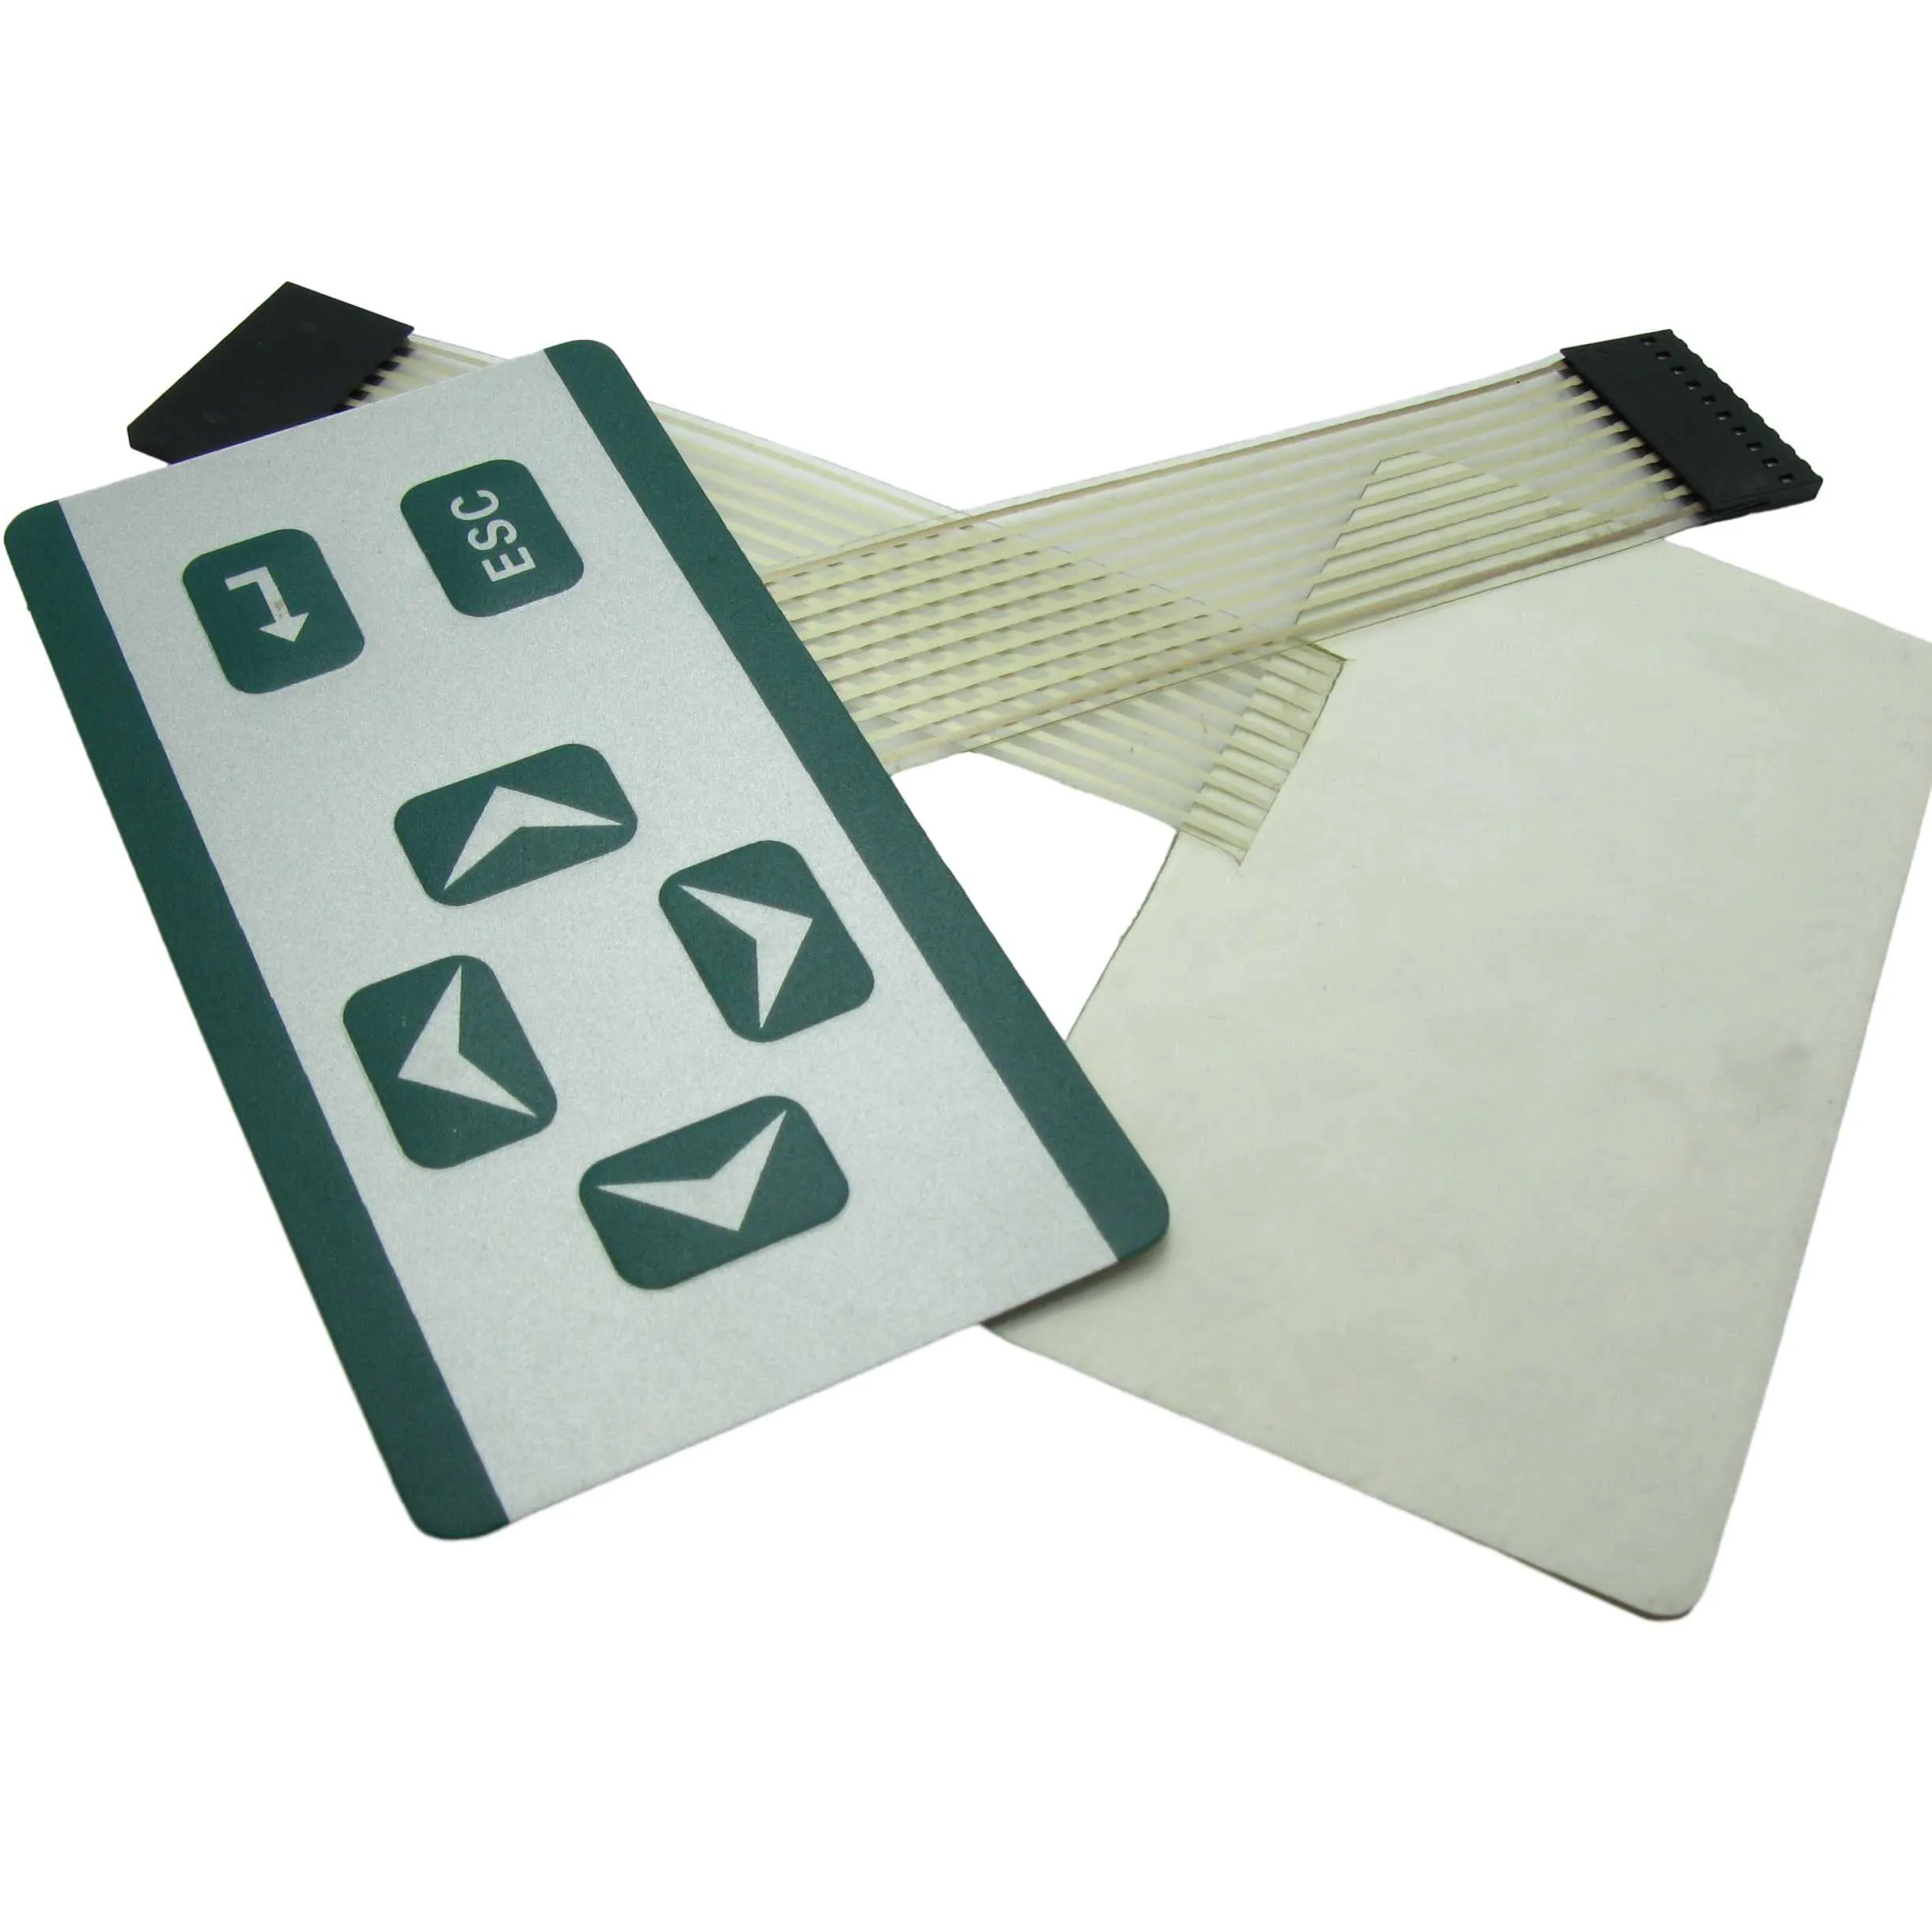 Crystaljet 3000 4000 6000 Series Inkjet Printer Printing Machinery Spare Parts Key Pad Control Panel Keyboard